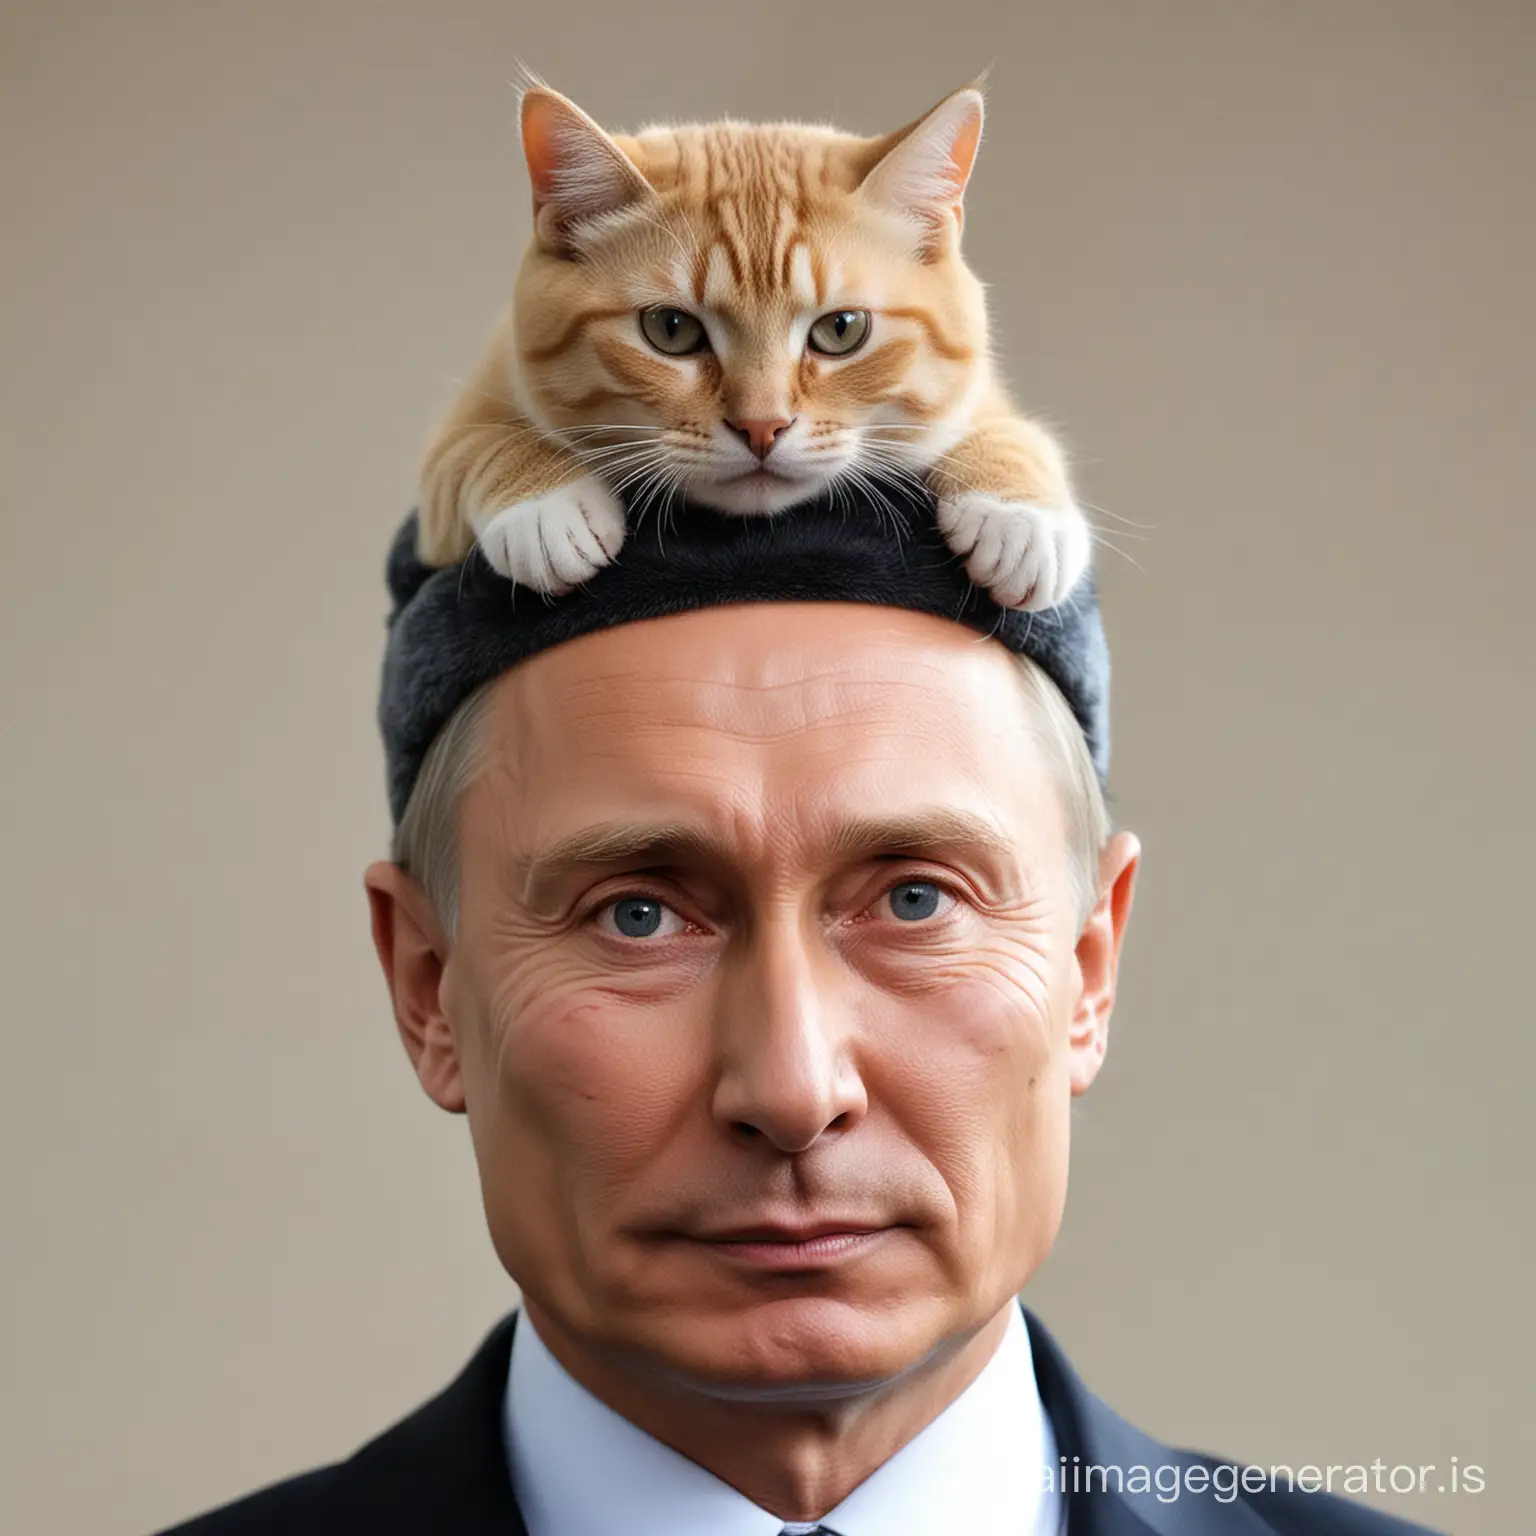 Putin with cat on his head